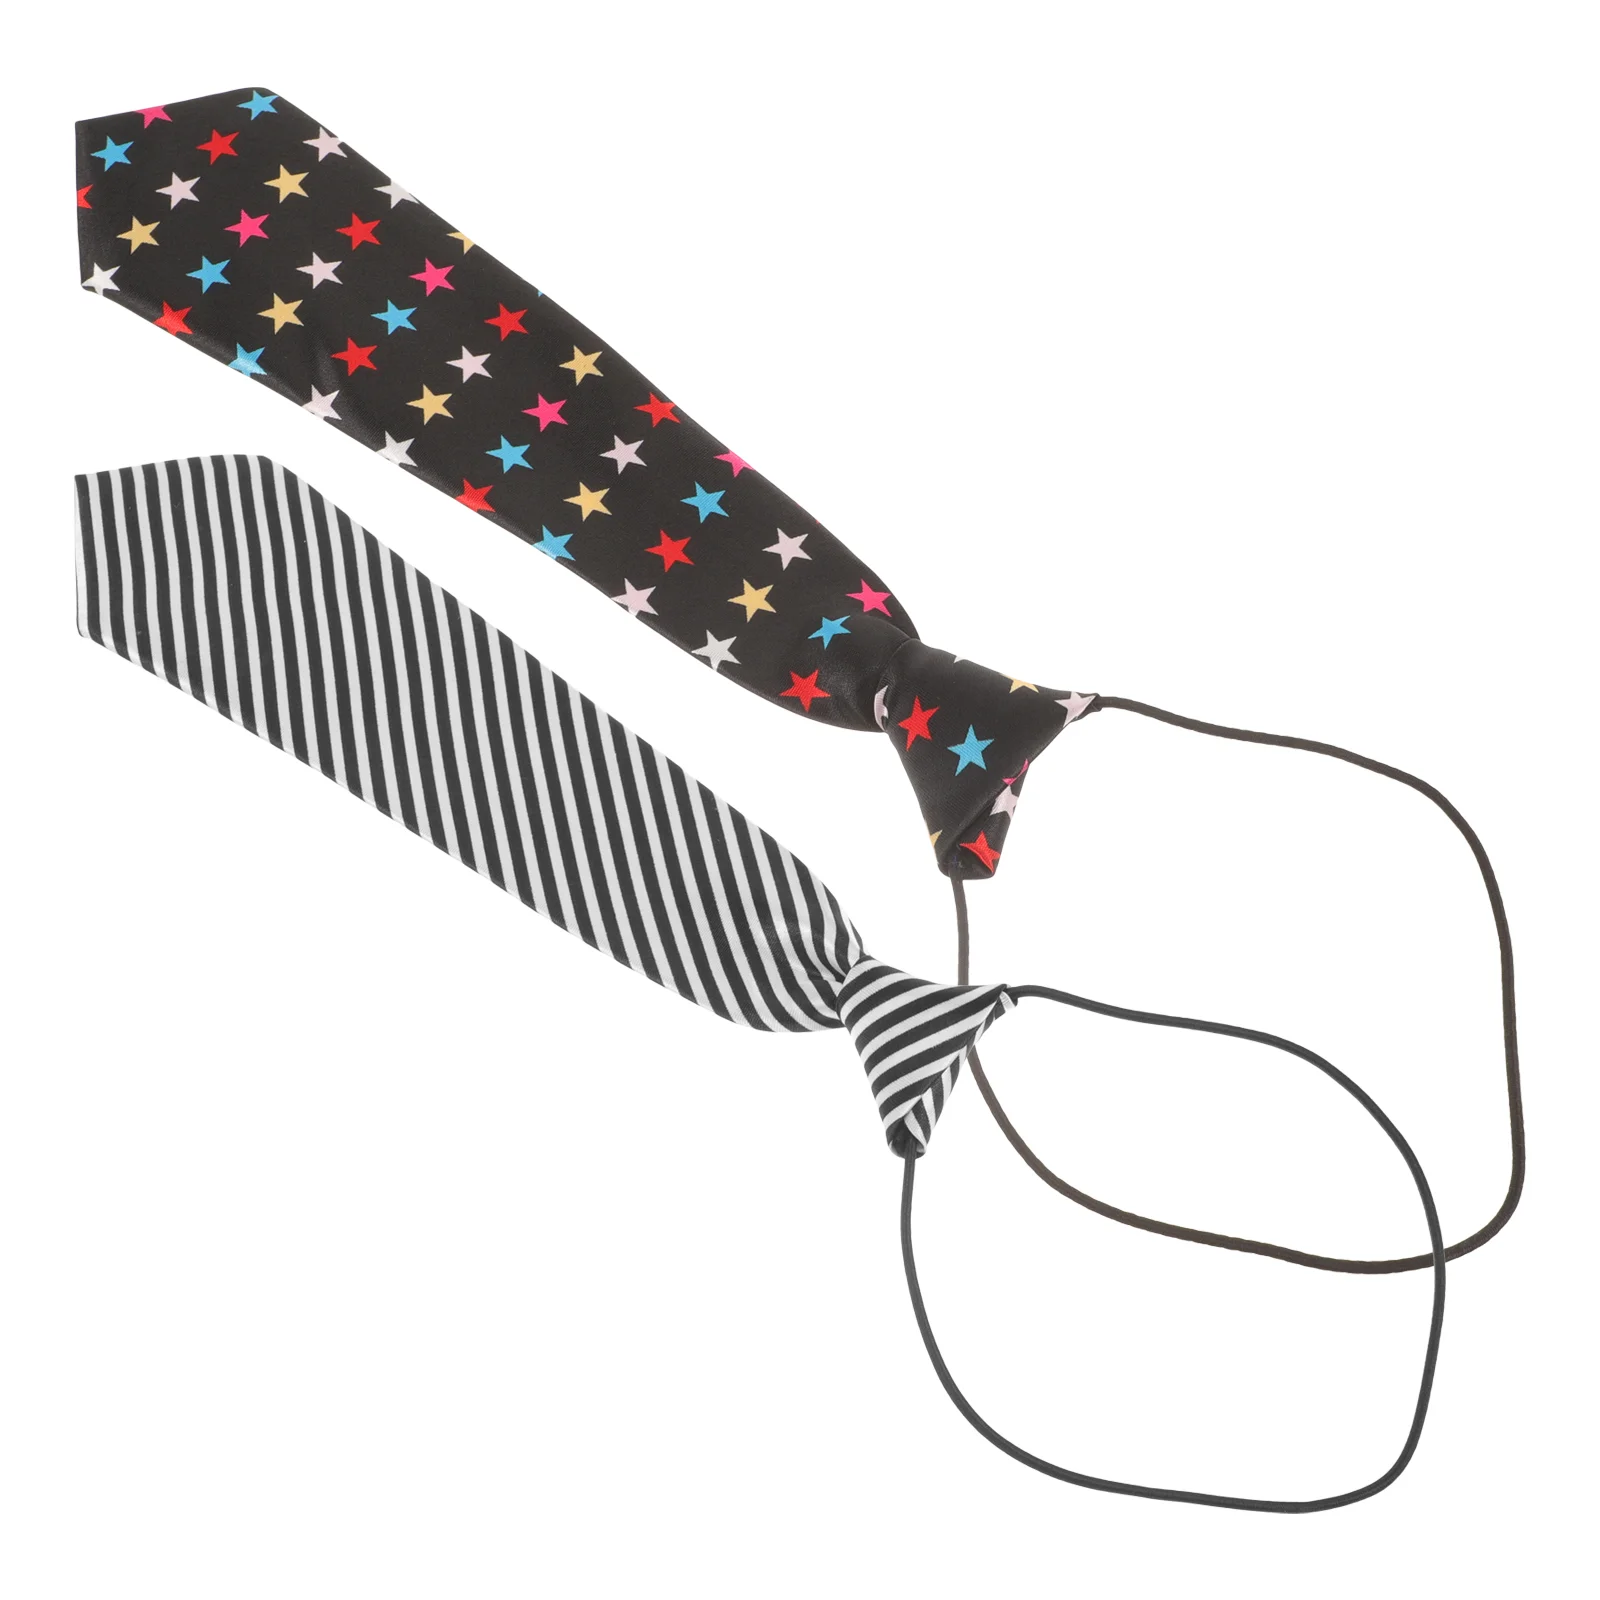 

2pcs Boys Neckties Elegant Ties Adjustable Ties Uniforms Attachments for Boys